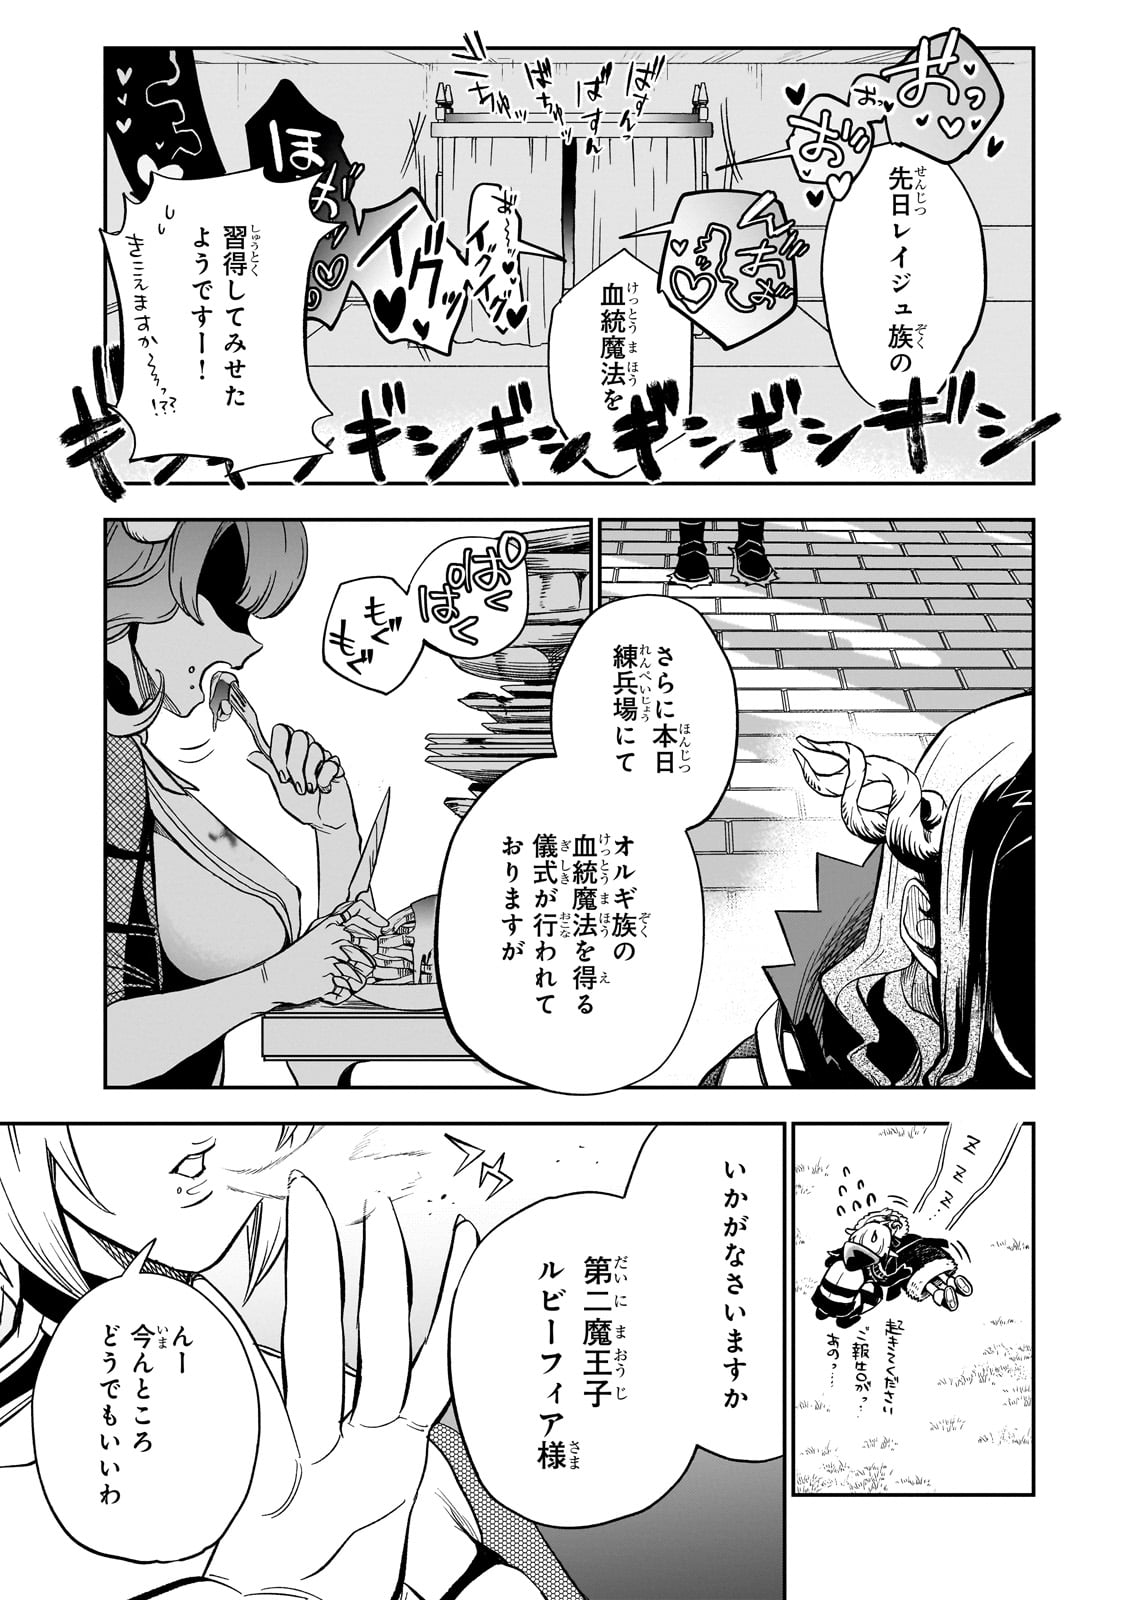 Dai Nana Maouji Zilvagias no Maou Keikokuki - Chapter 9 - Page 39